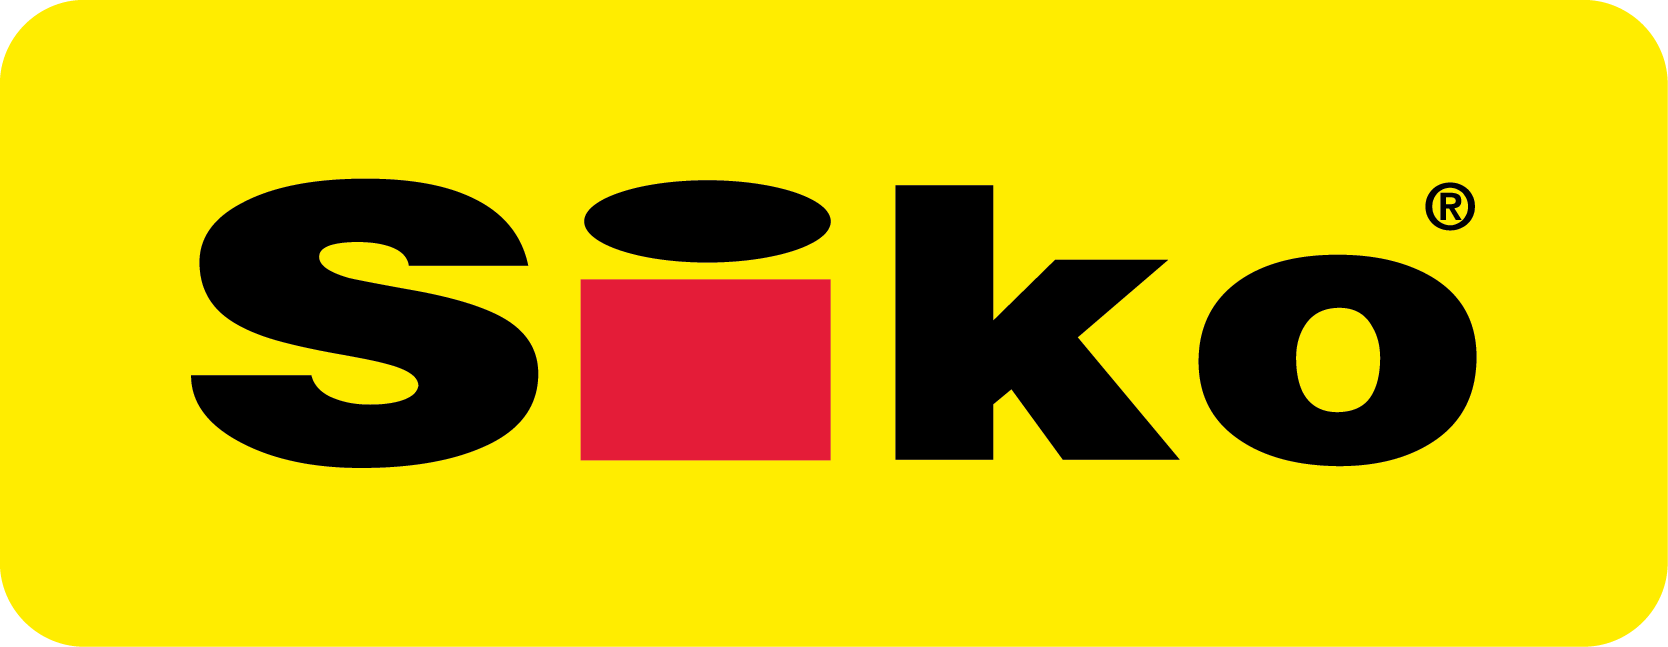 Siko PNG--1668, Siko PNG - Free PNG